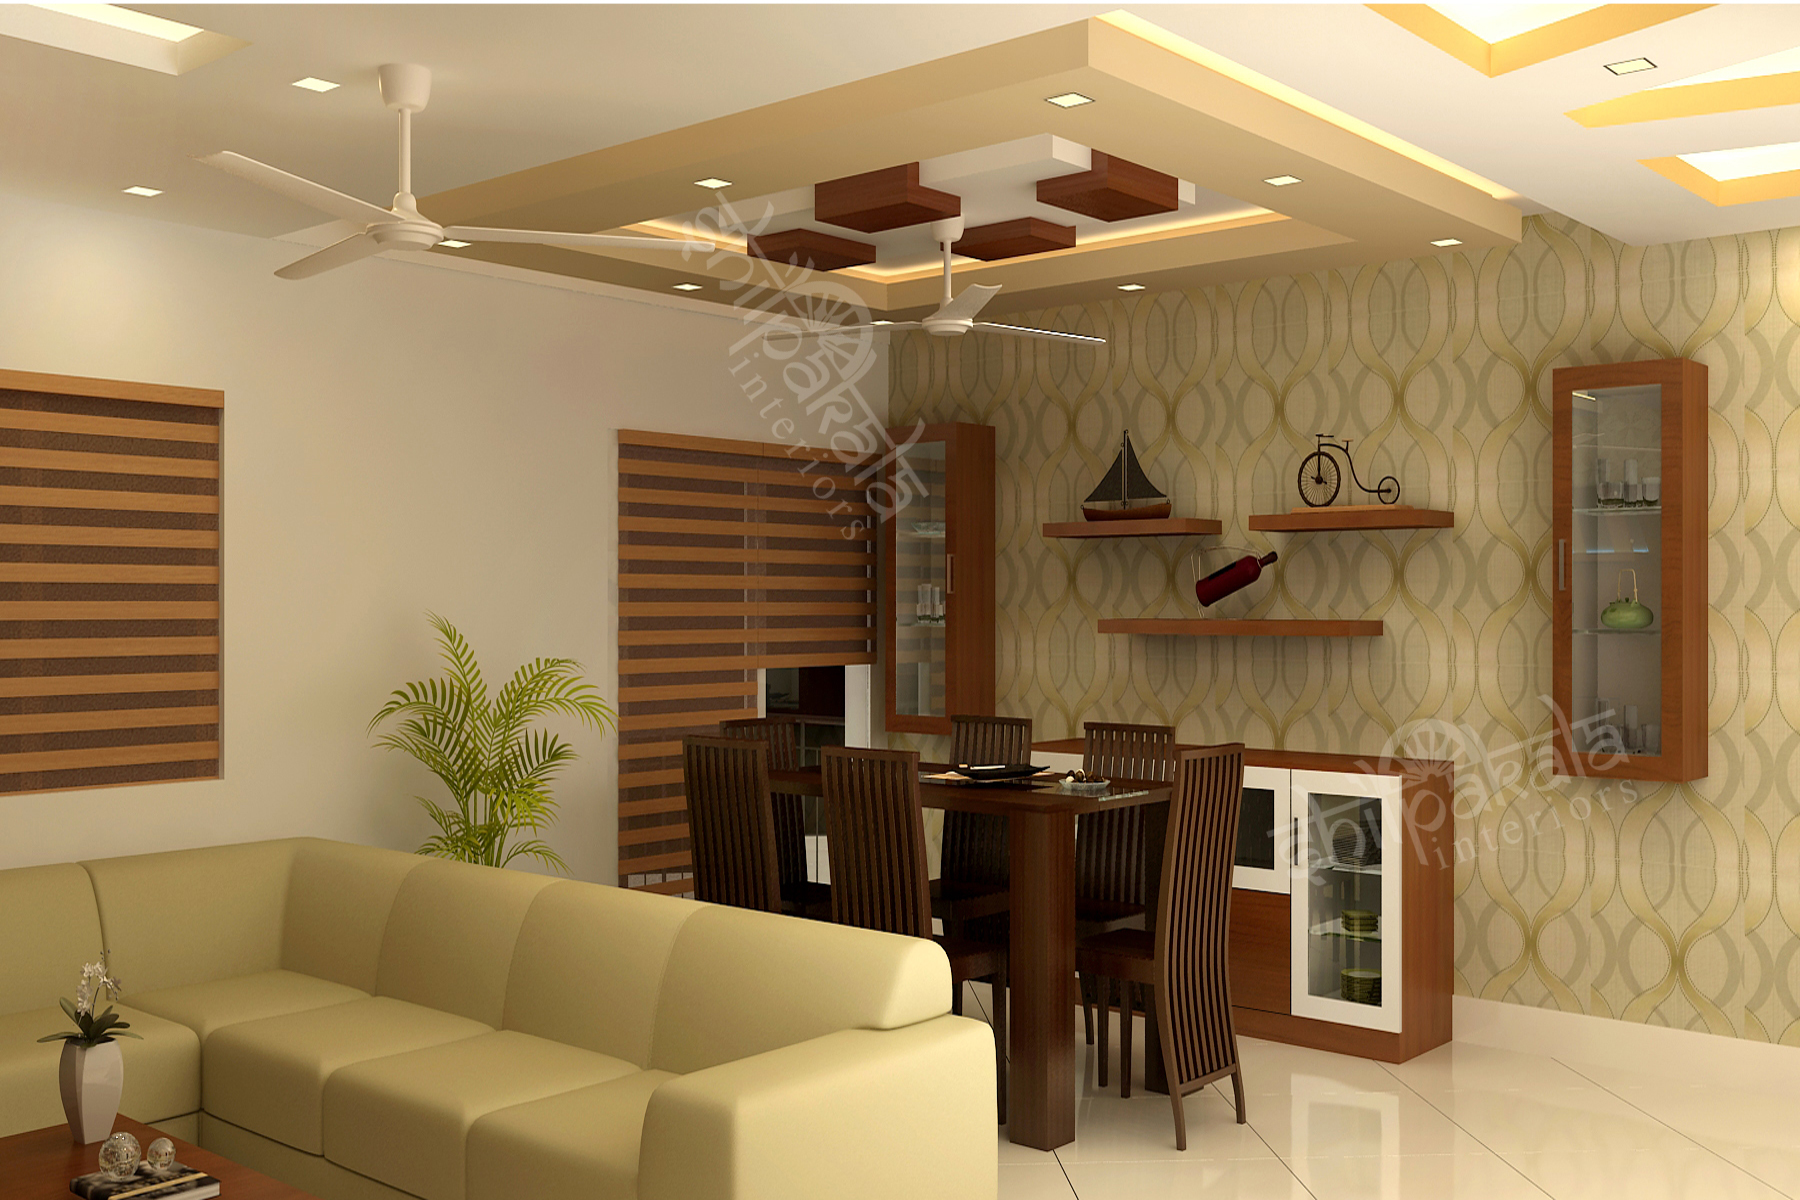 Kerala Home Interior Design Images Gallery